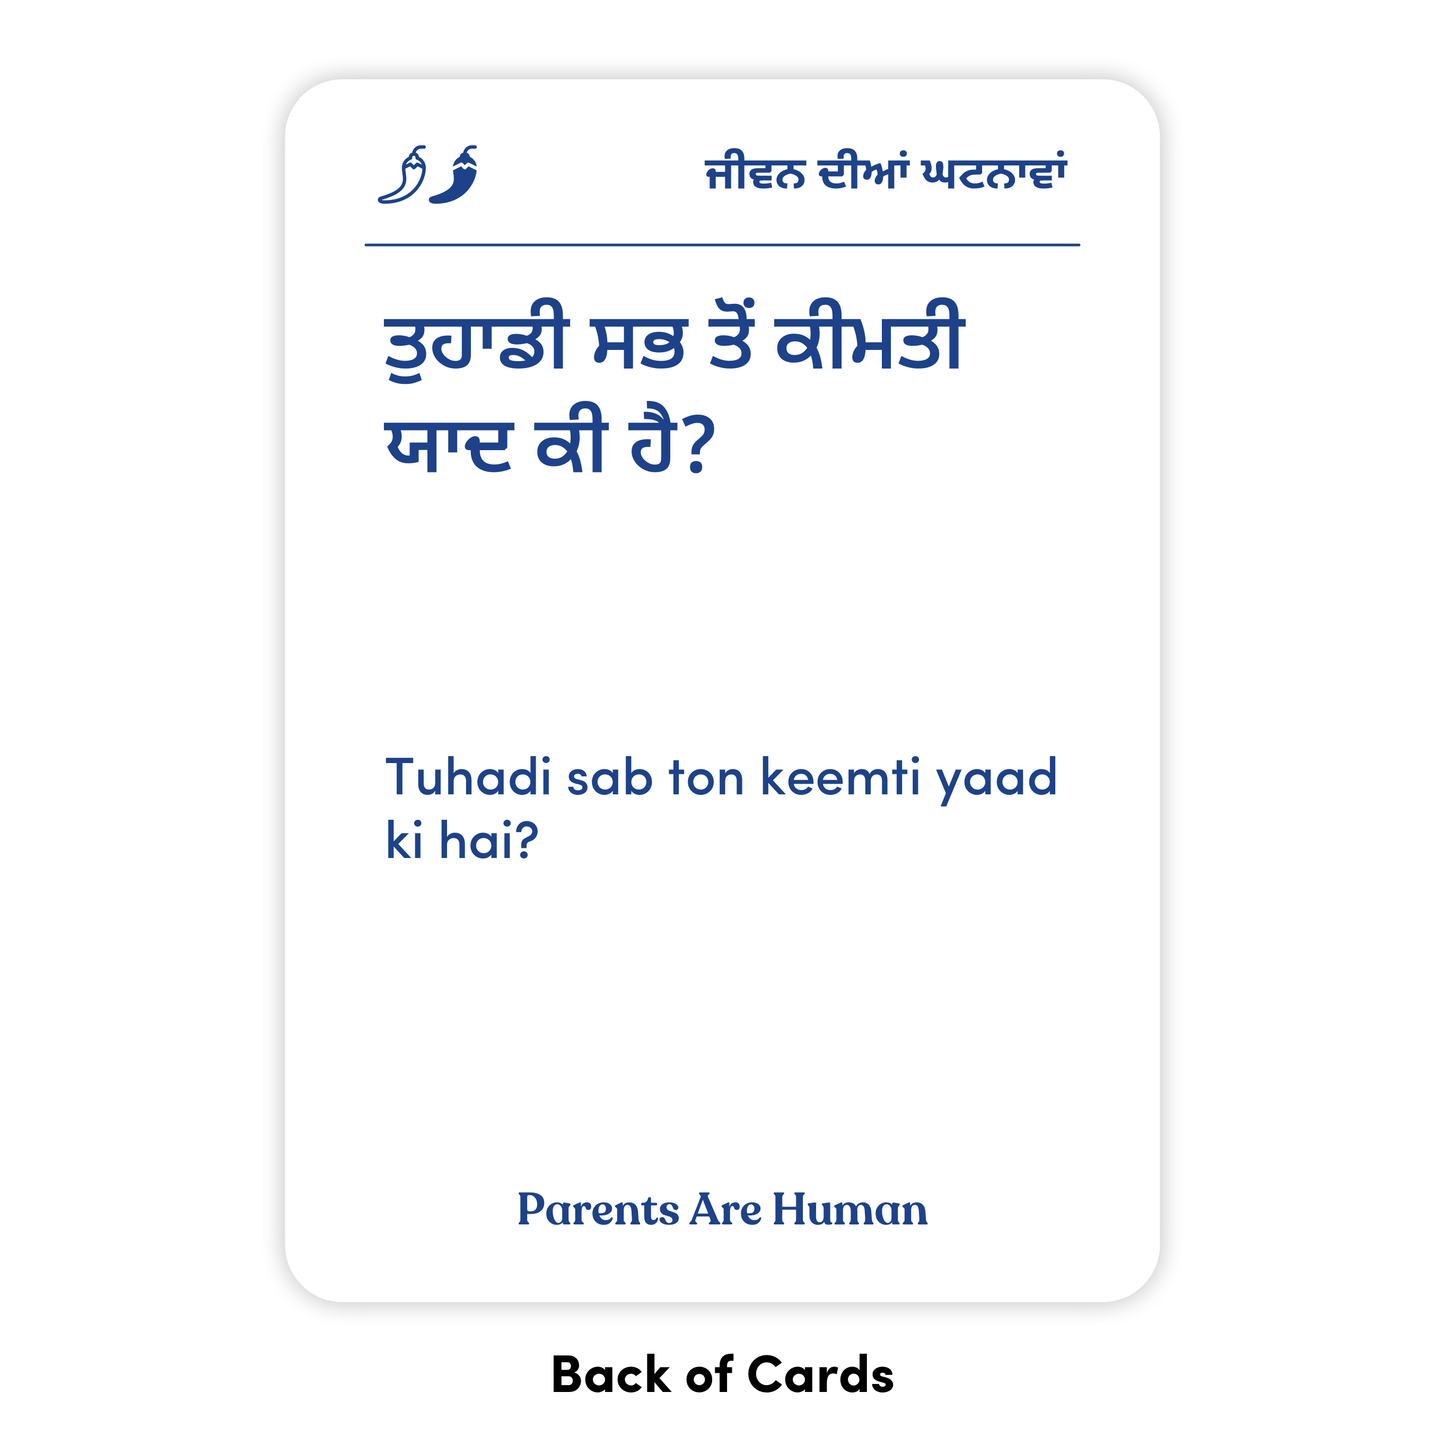 Parents Are Human (English + Punjabi/Gurmukhī)